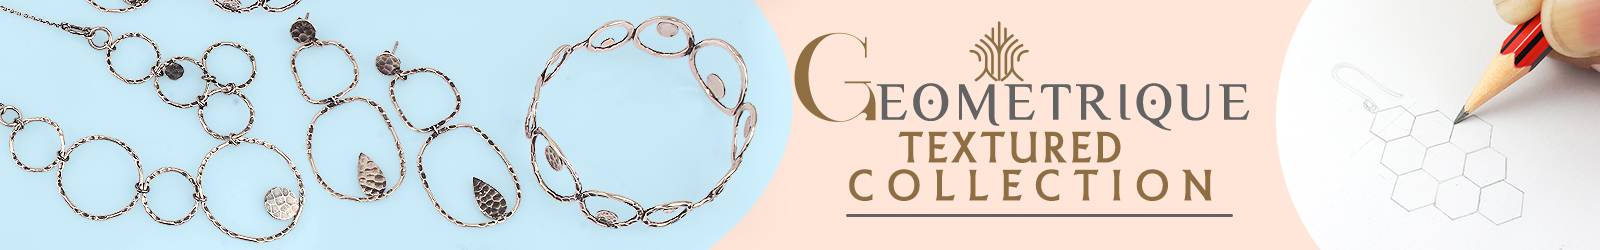 Geometrique textured jewelry manufacturer